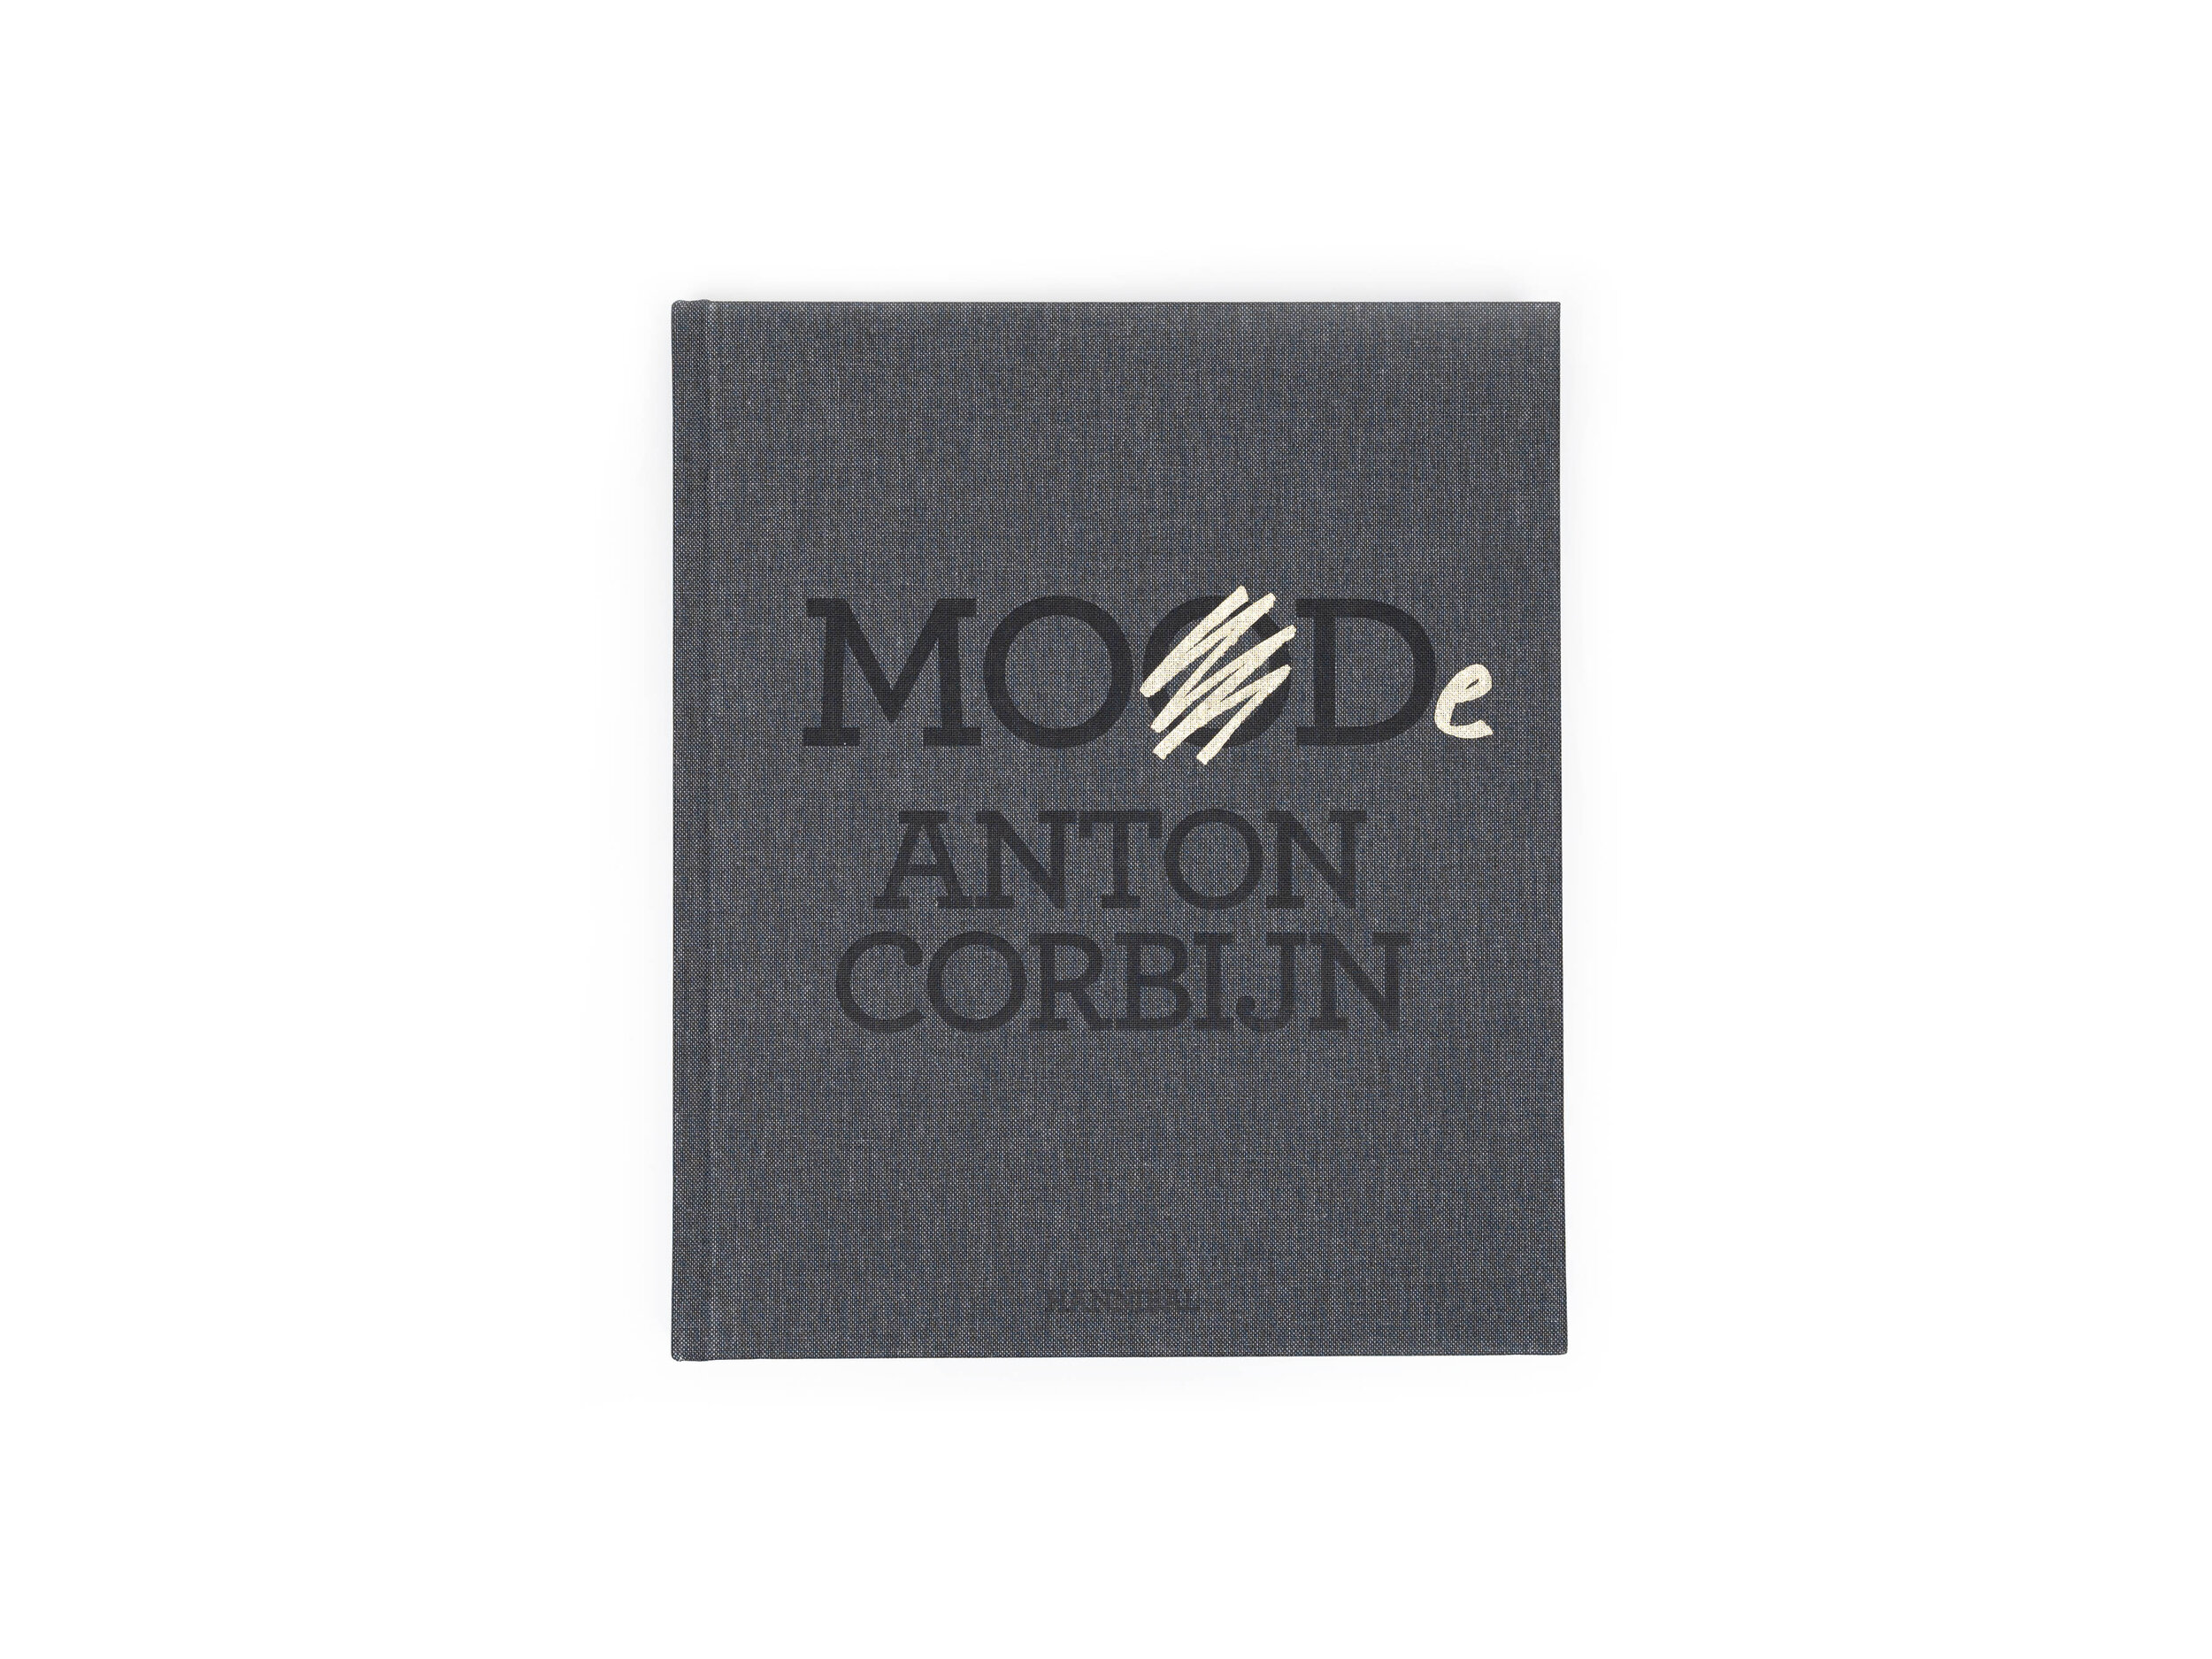 Anton Corbijn - Mood